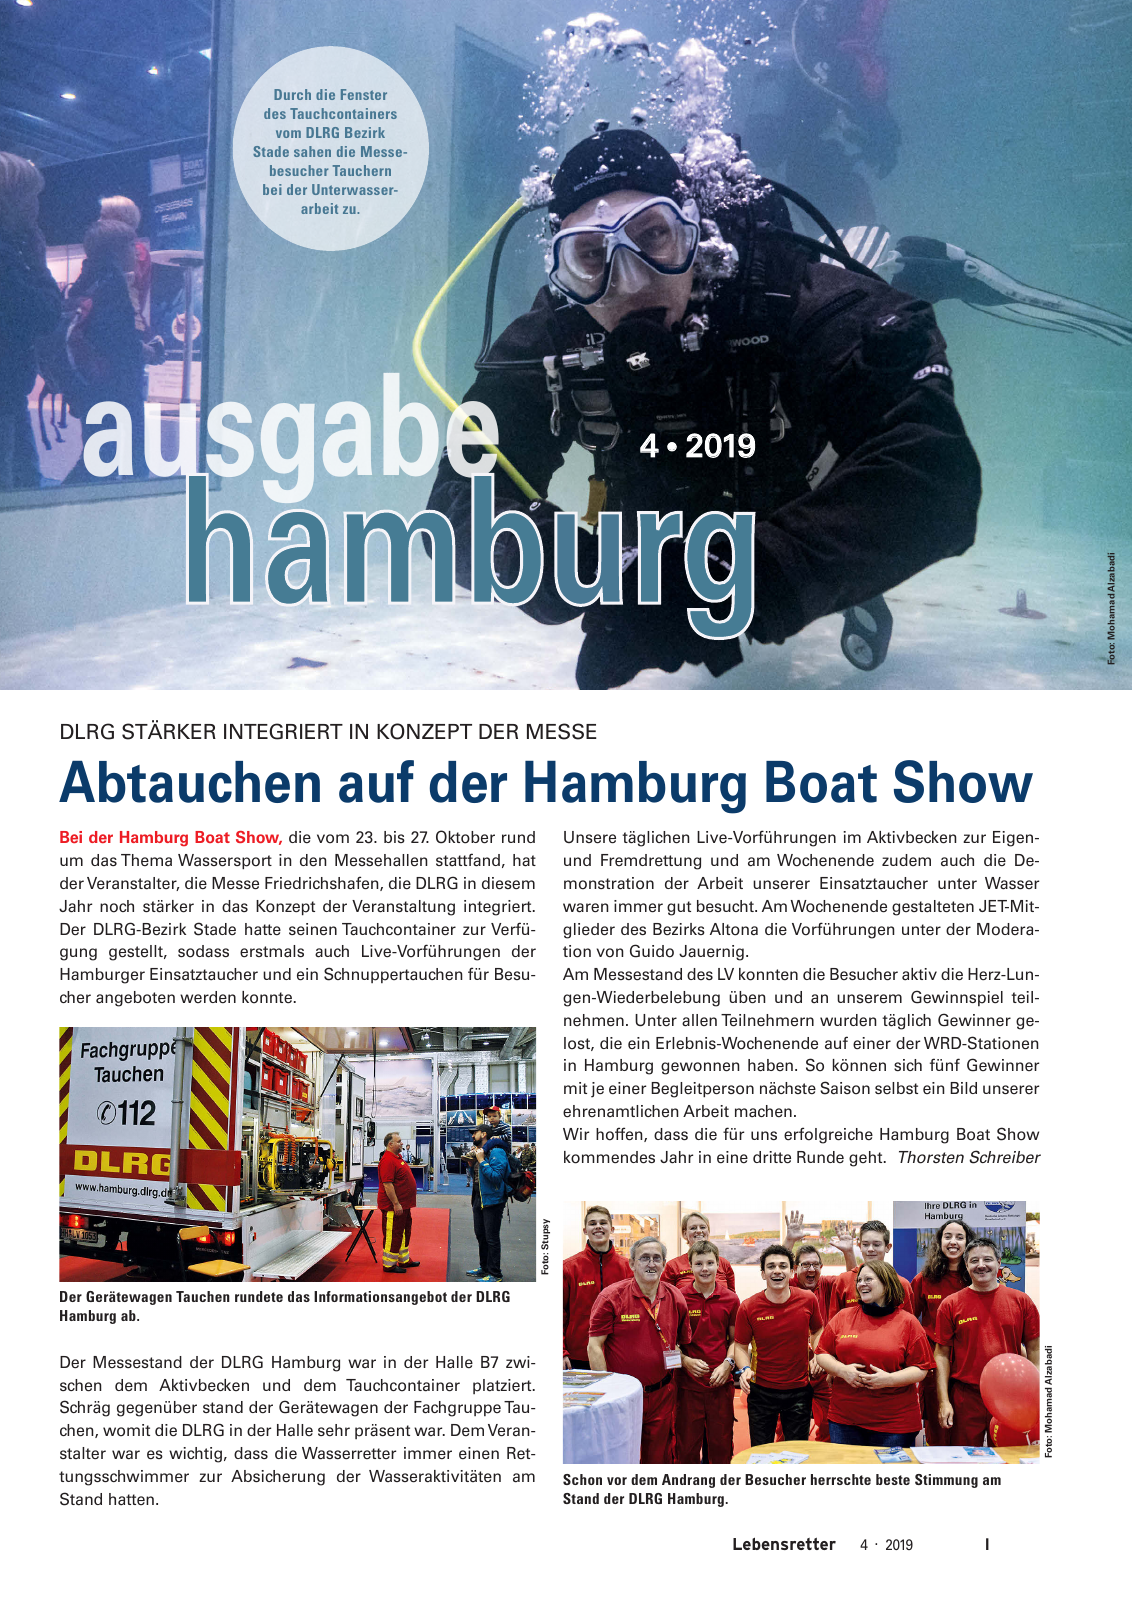 Vorschau Lebensretter 4/2019 -  Hamburg Regionalausgabe Seite 3